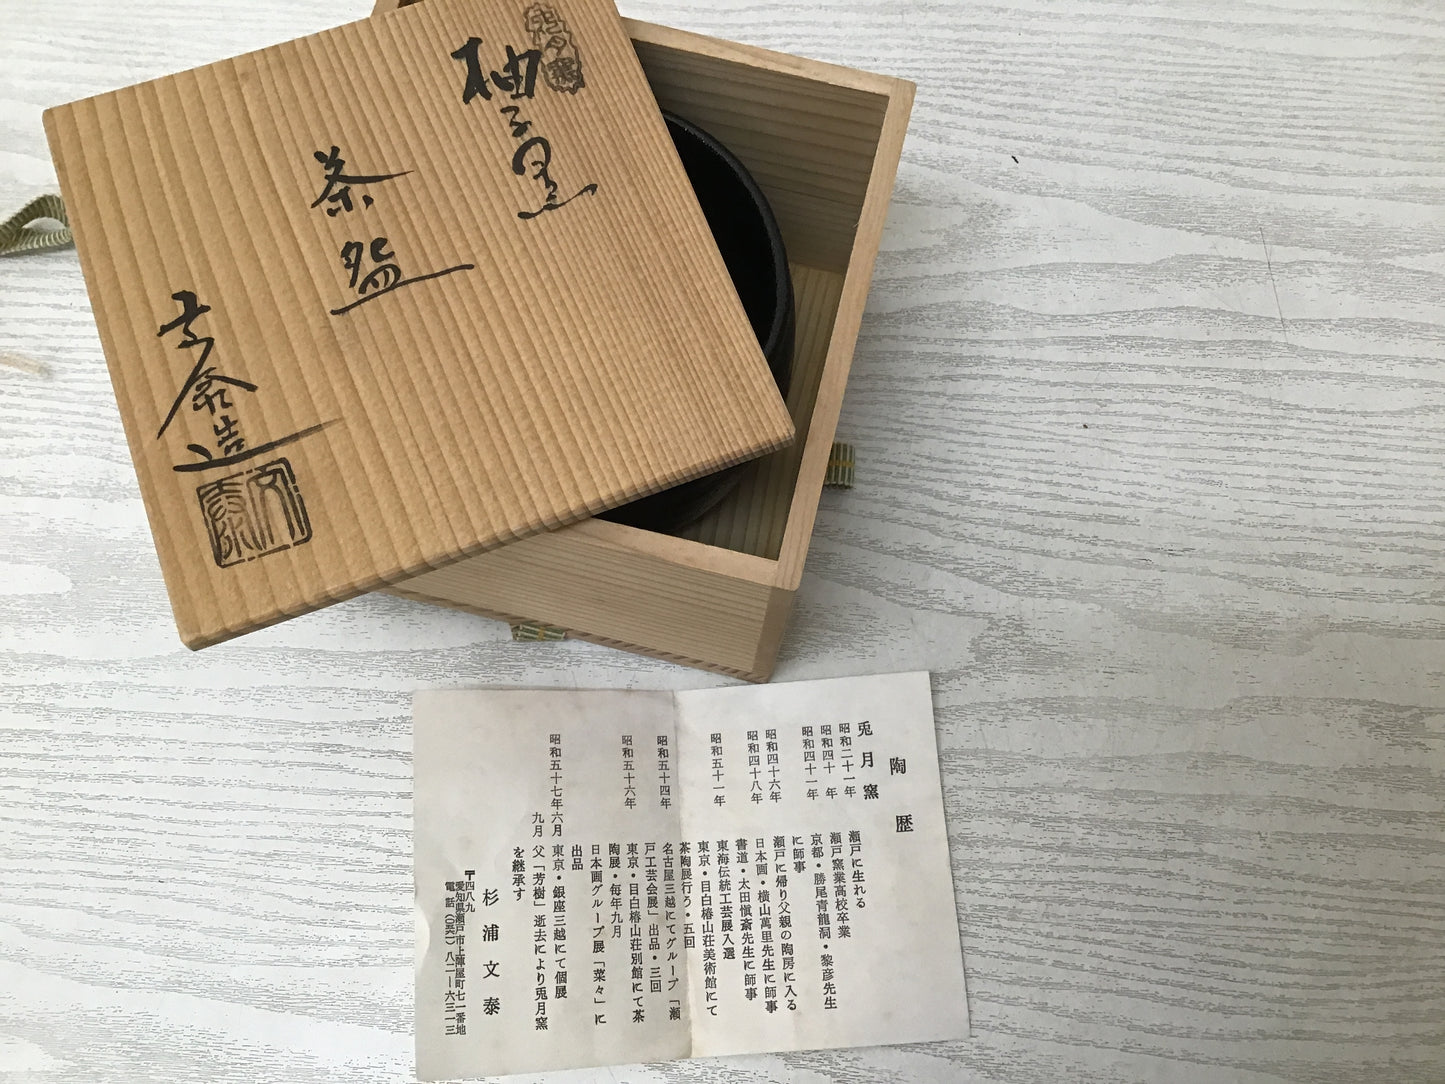 Y2573 CHAWAN Seto-ware Black signed box Japan tea ceremony antique pottery